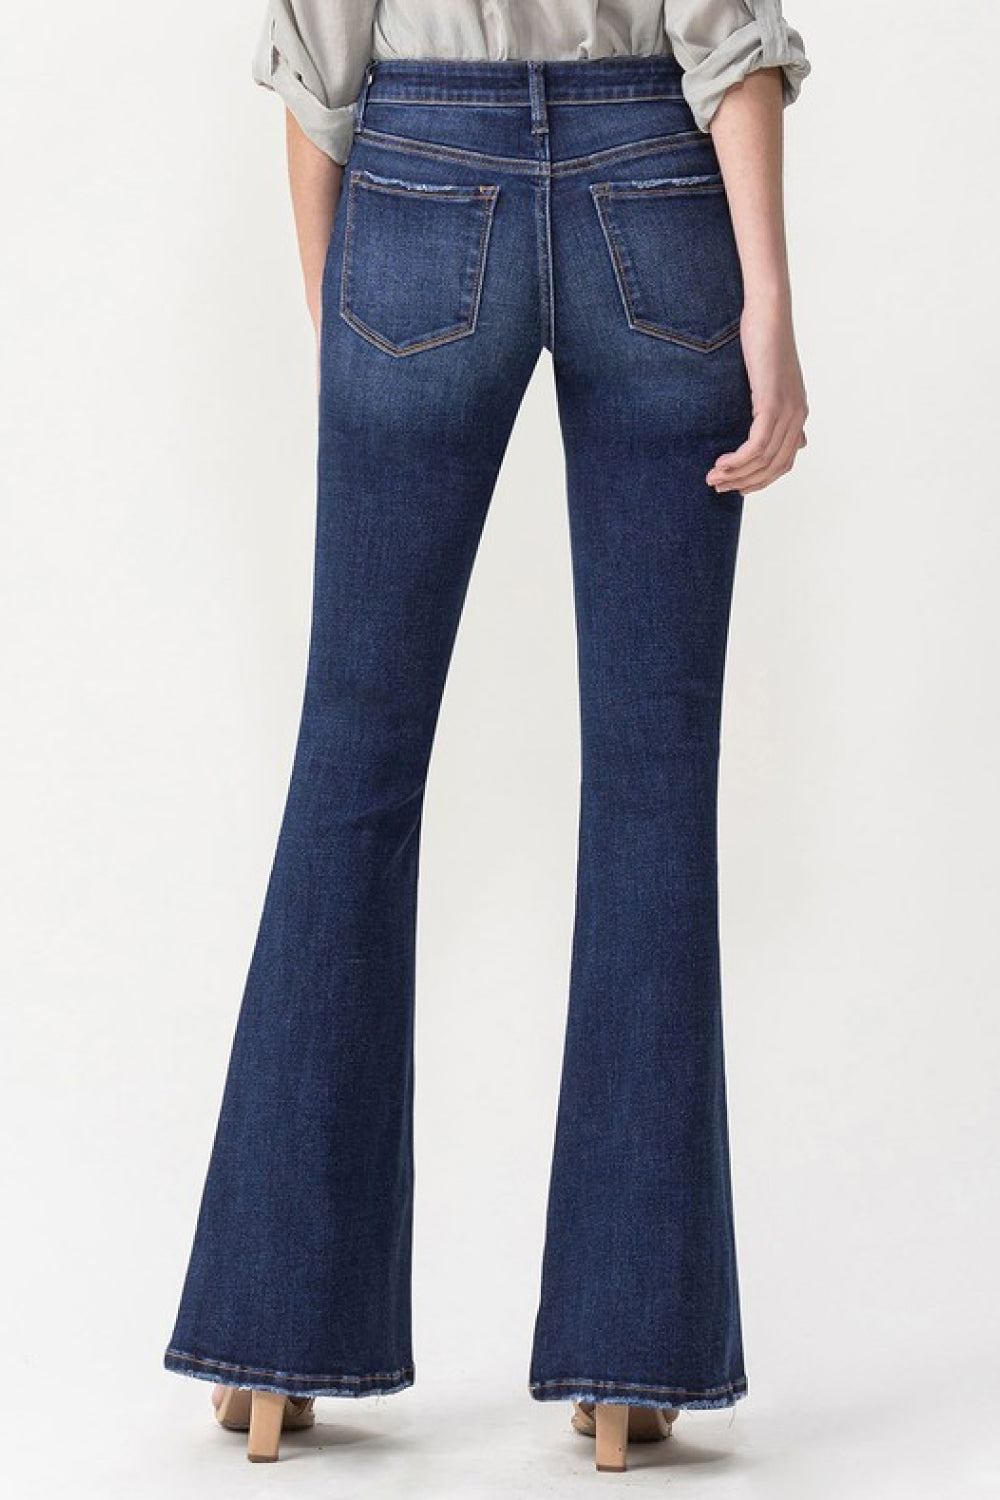 Lavender Lovervet Full Size Joanna Midrise Flare Jeans Pants